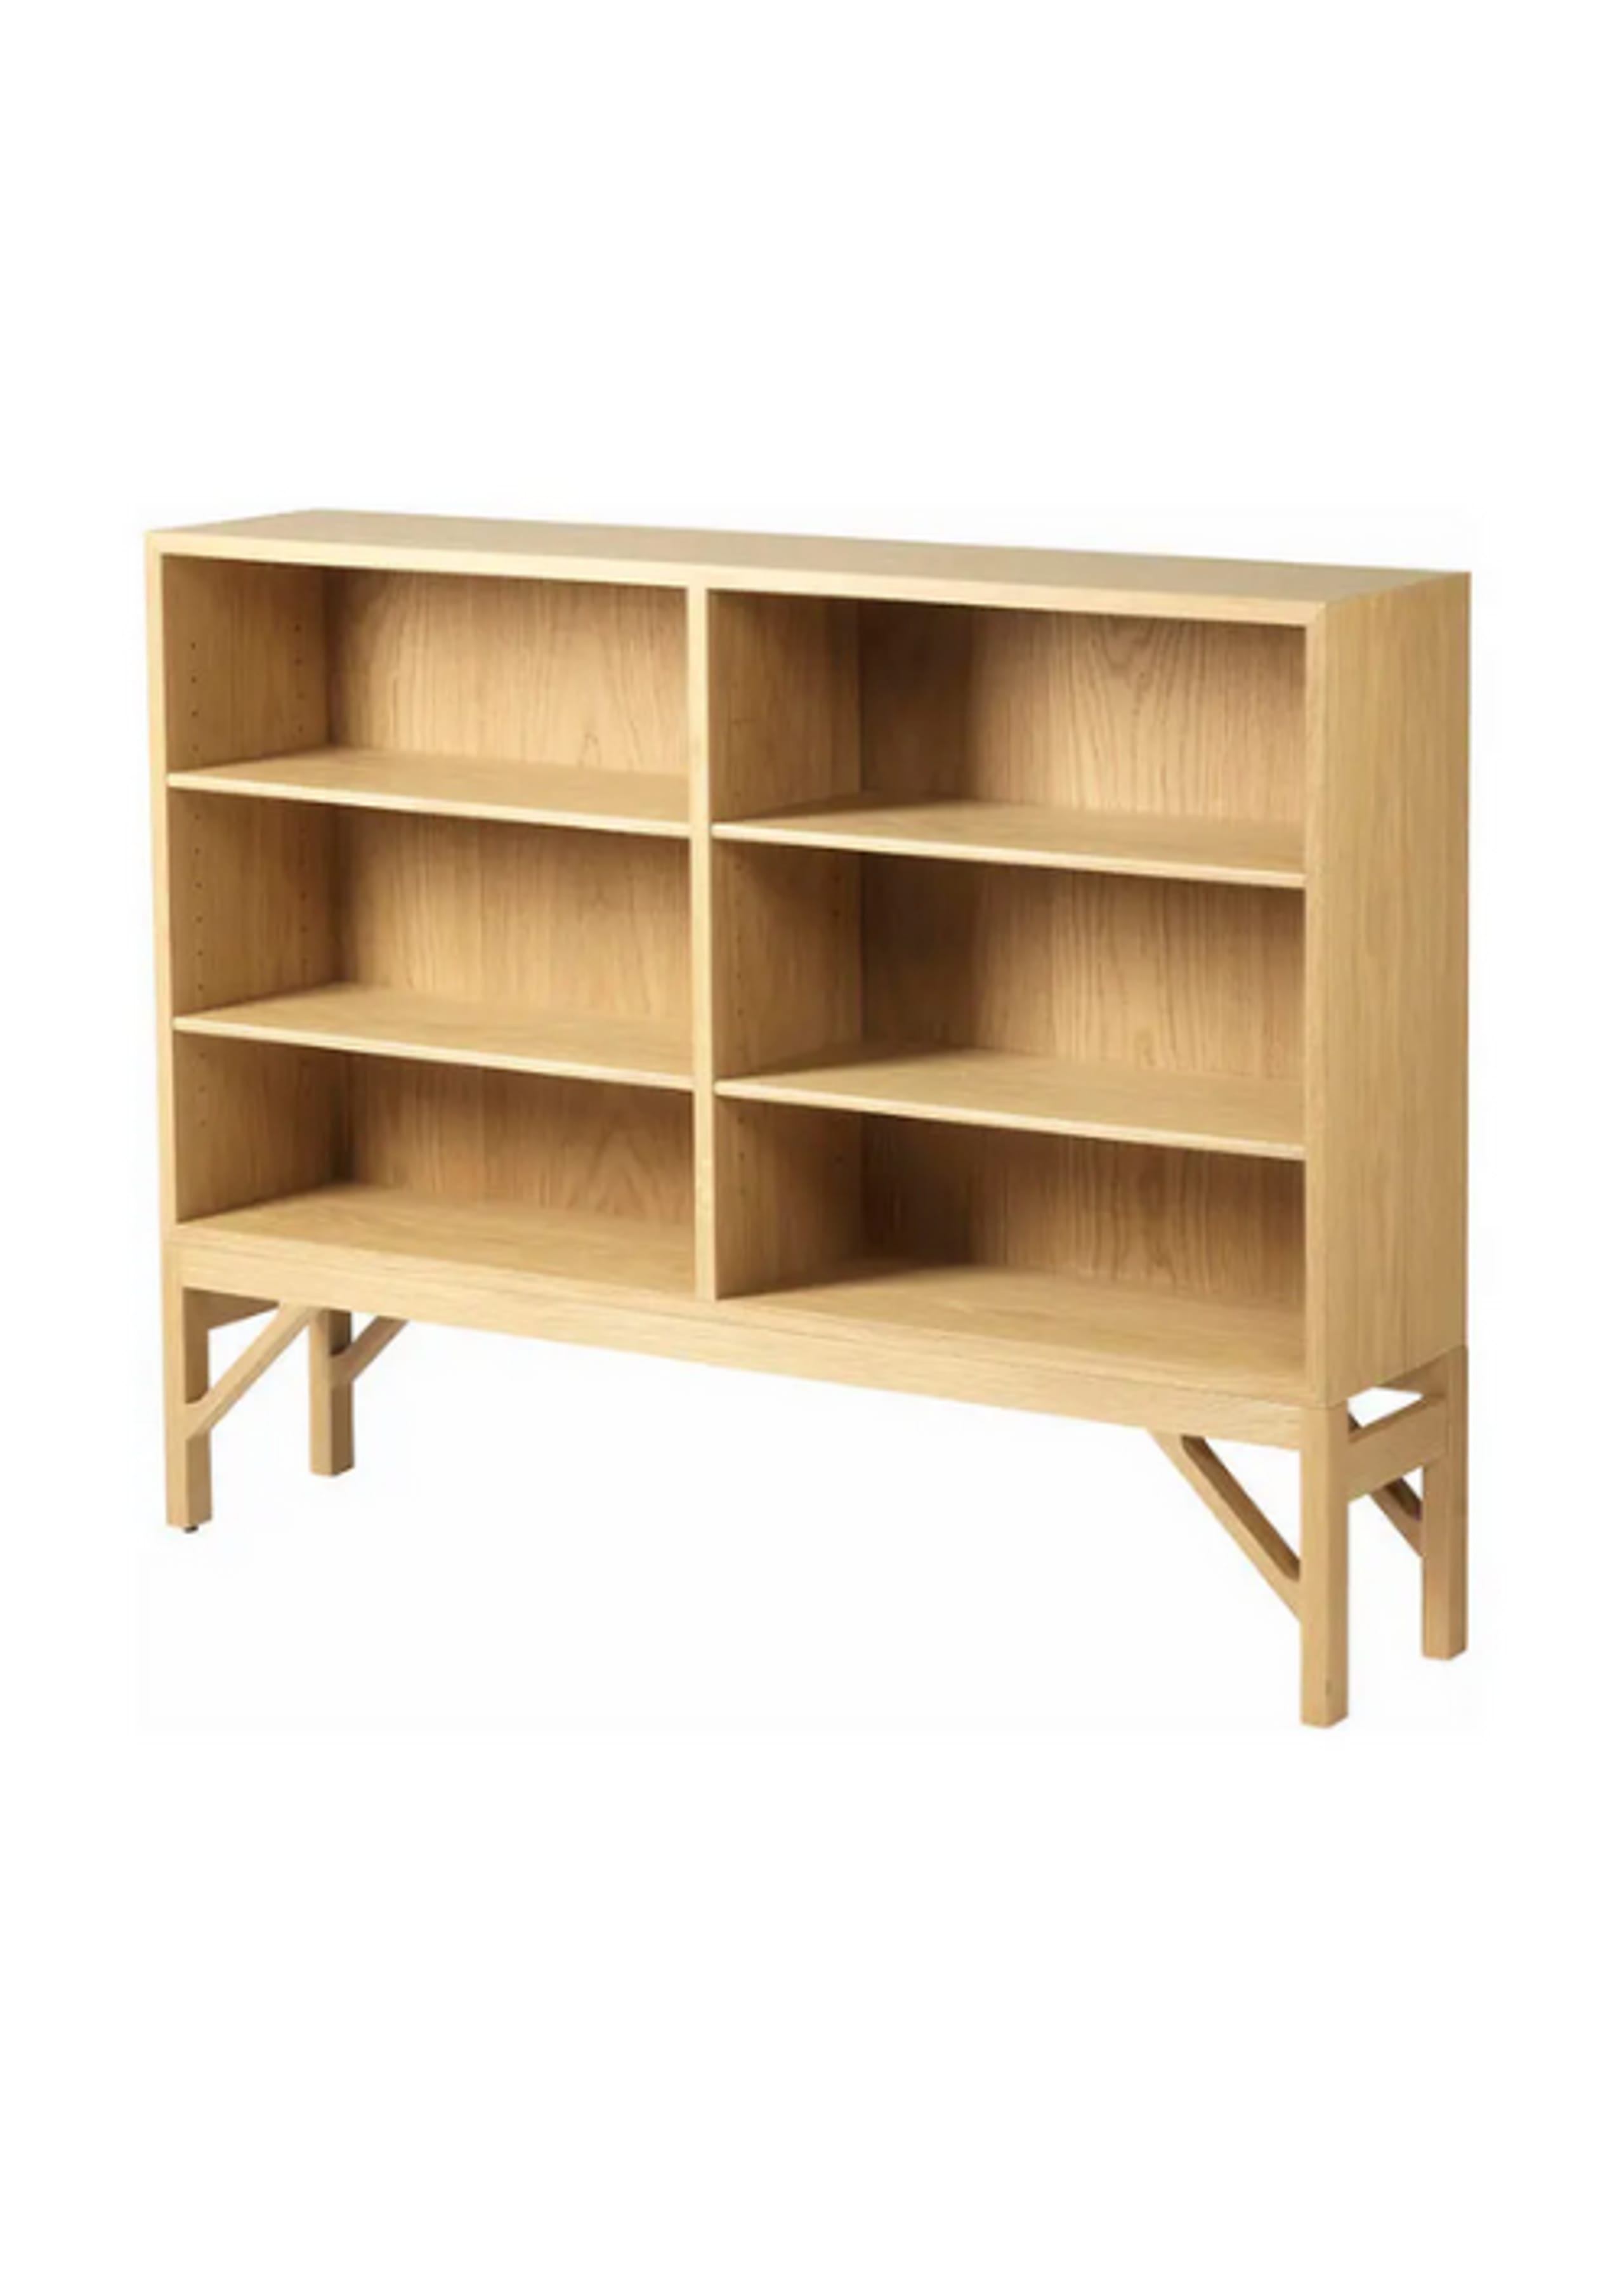 FDB Møbler / Furniture - Reol - A153 - Reol - Eg - Lakeret